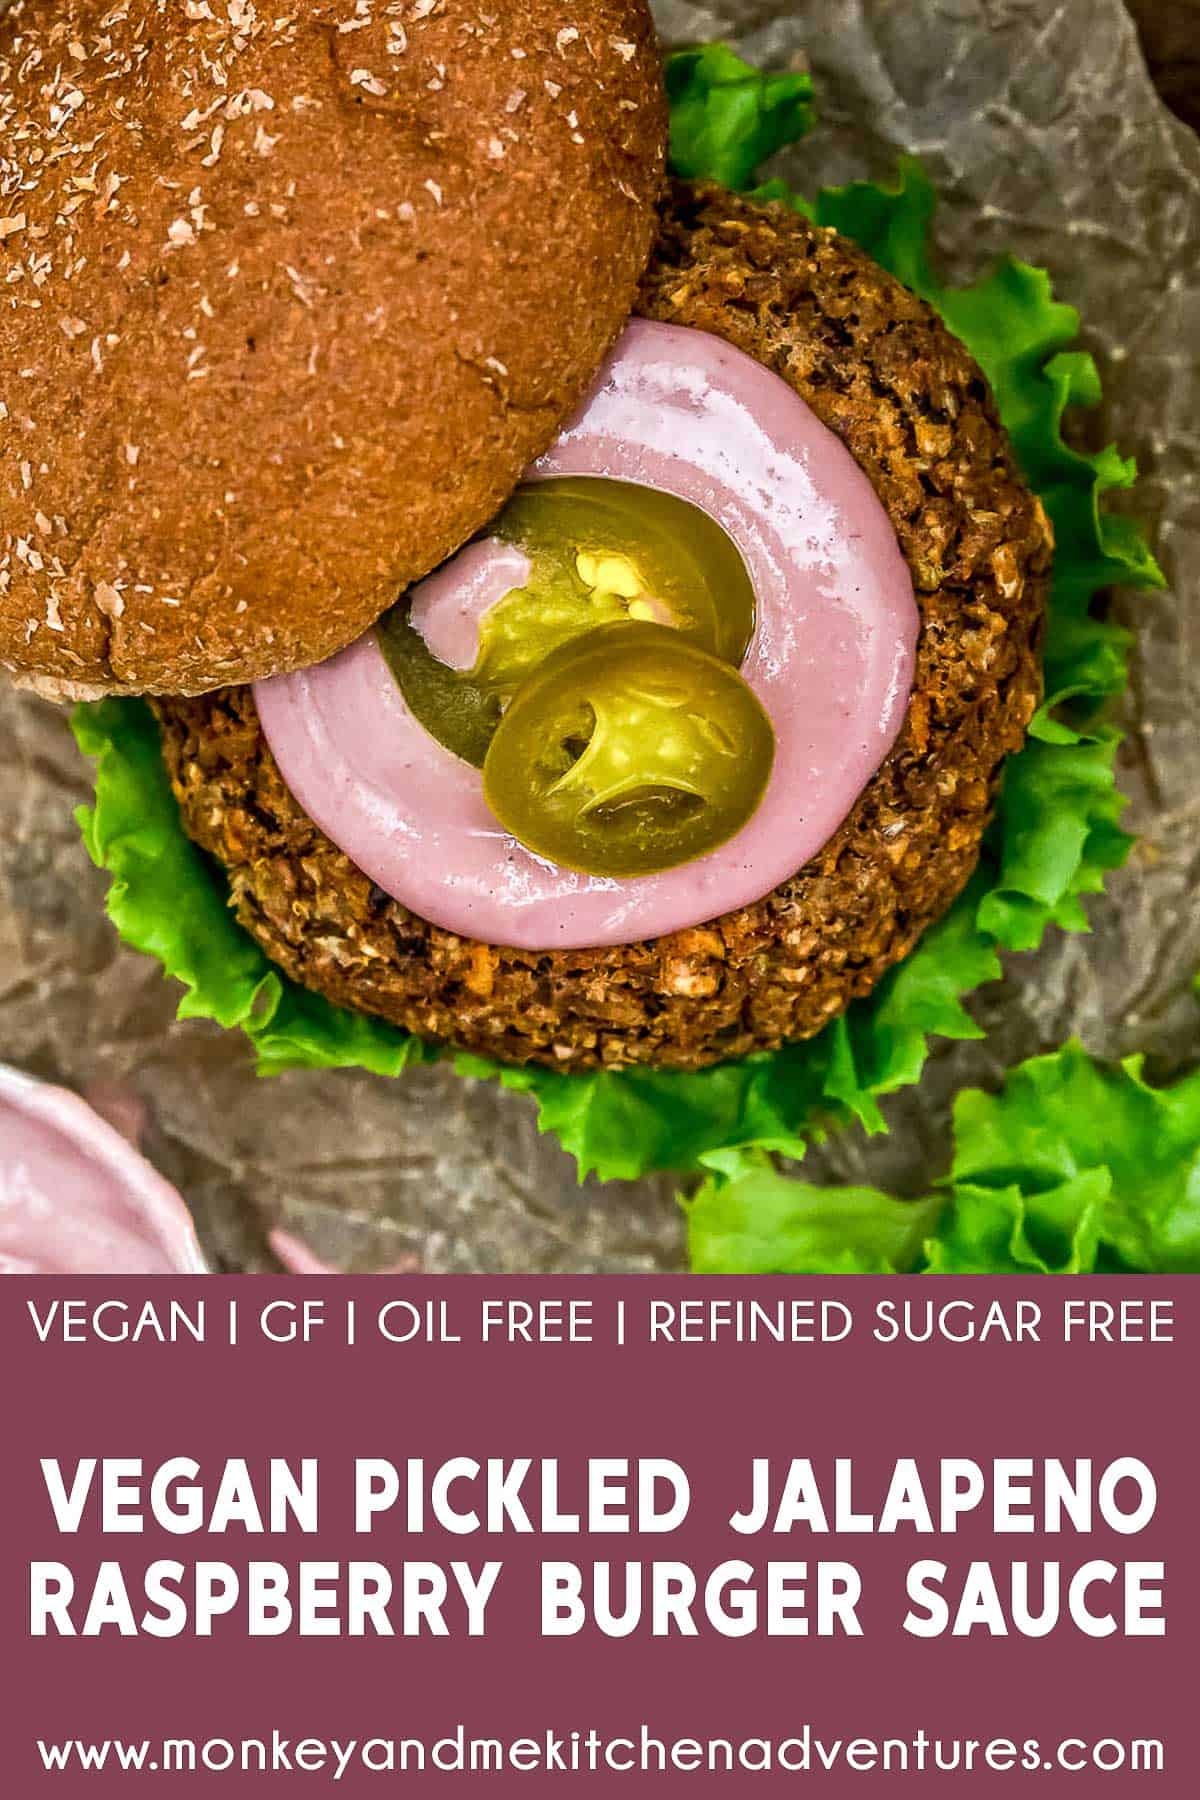 Vegan Pickled Jalapeño Raspberry Burger Sauce with Text Description